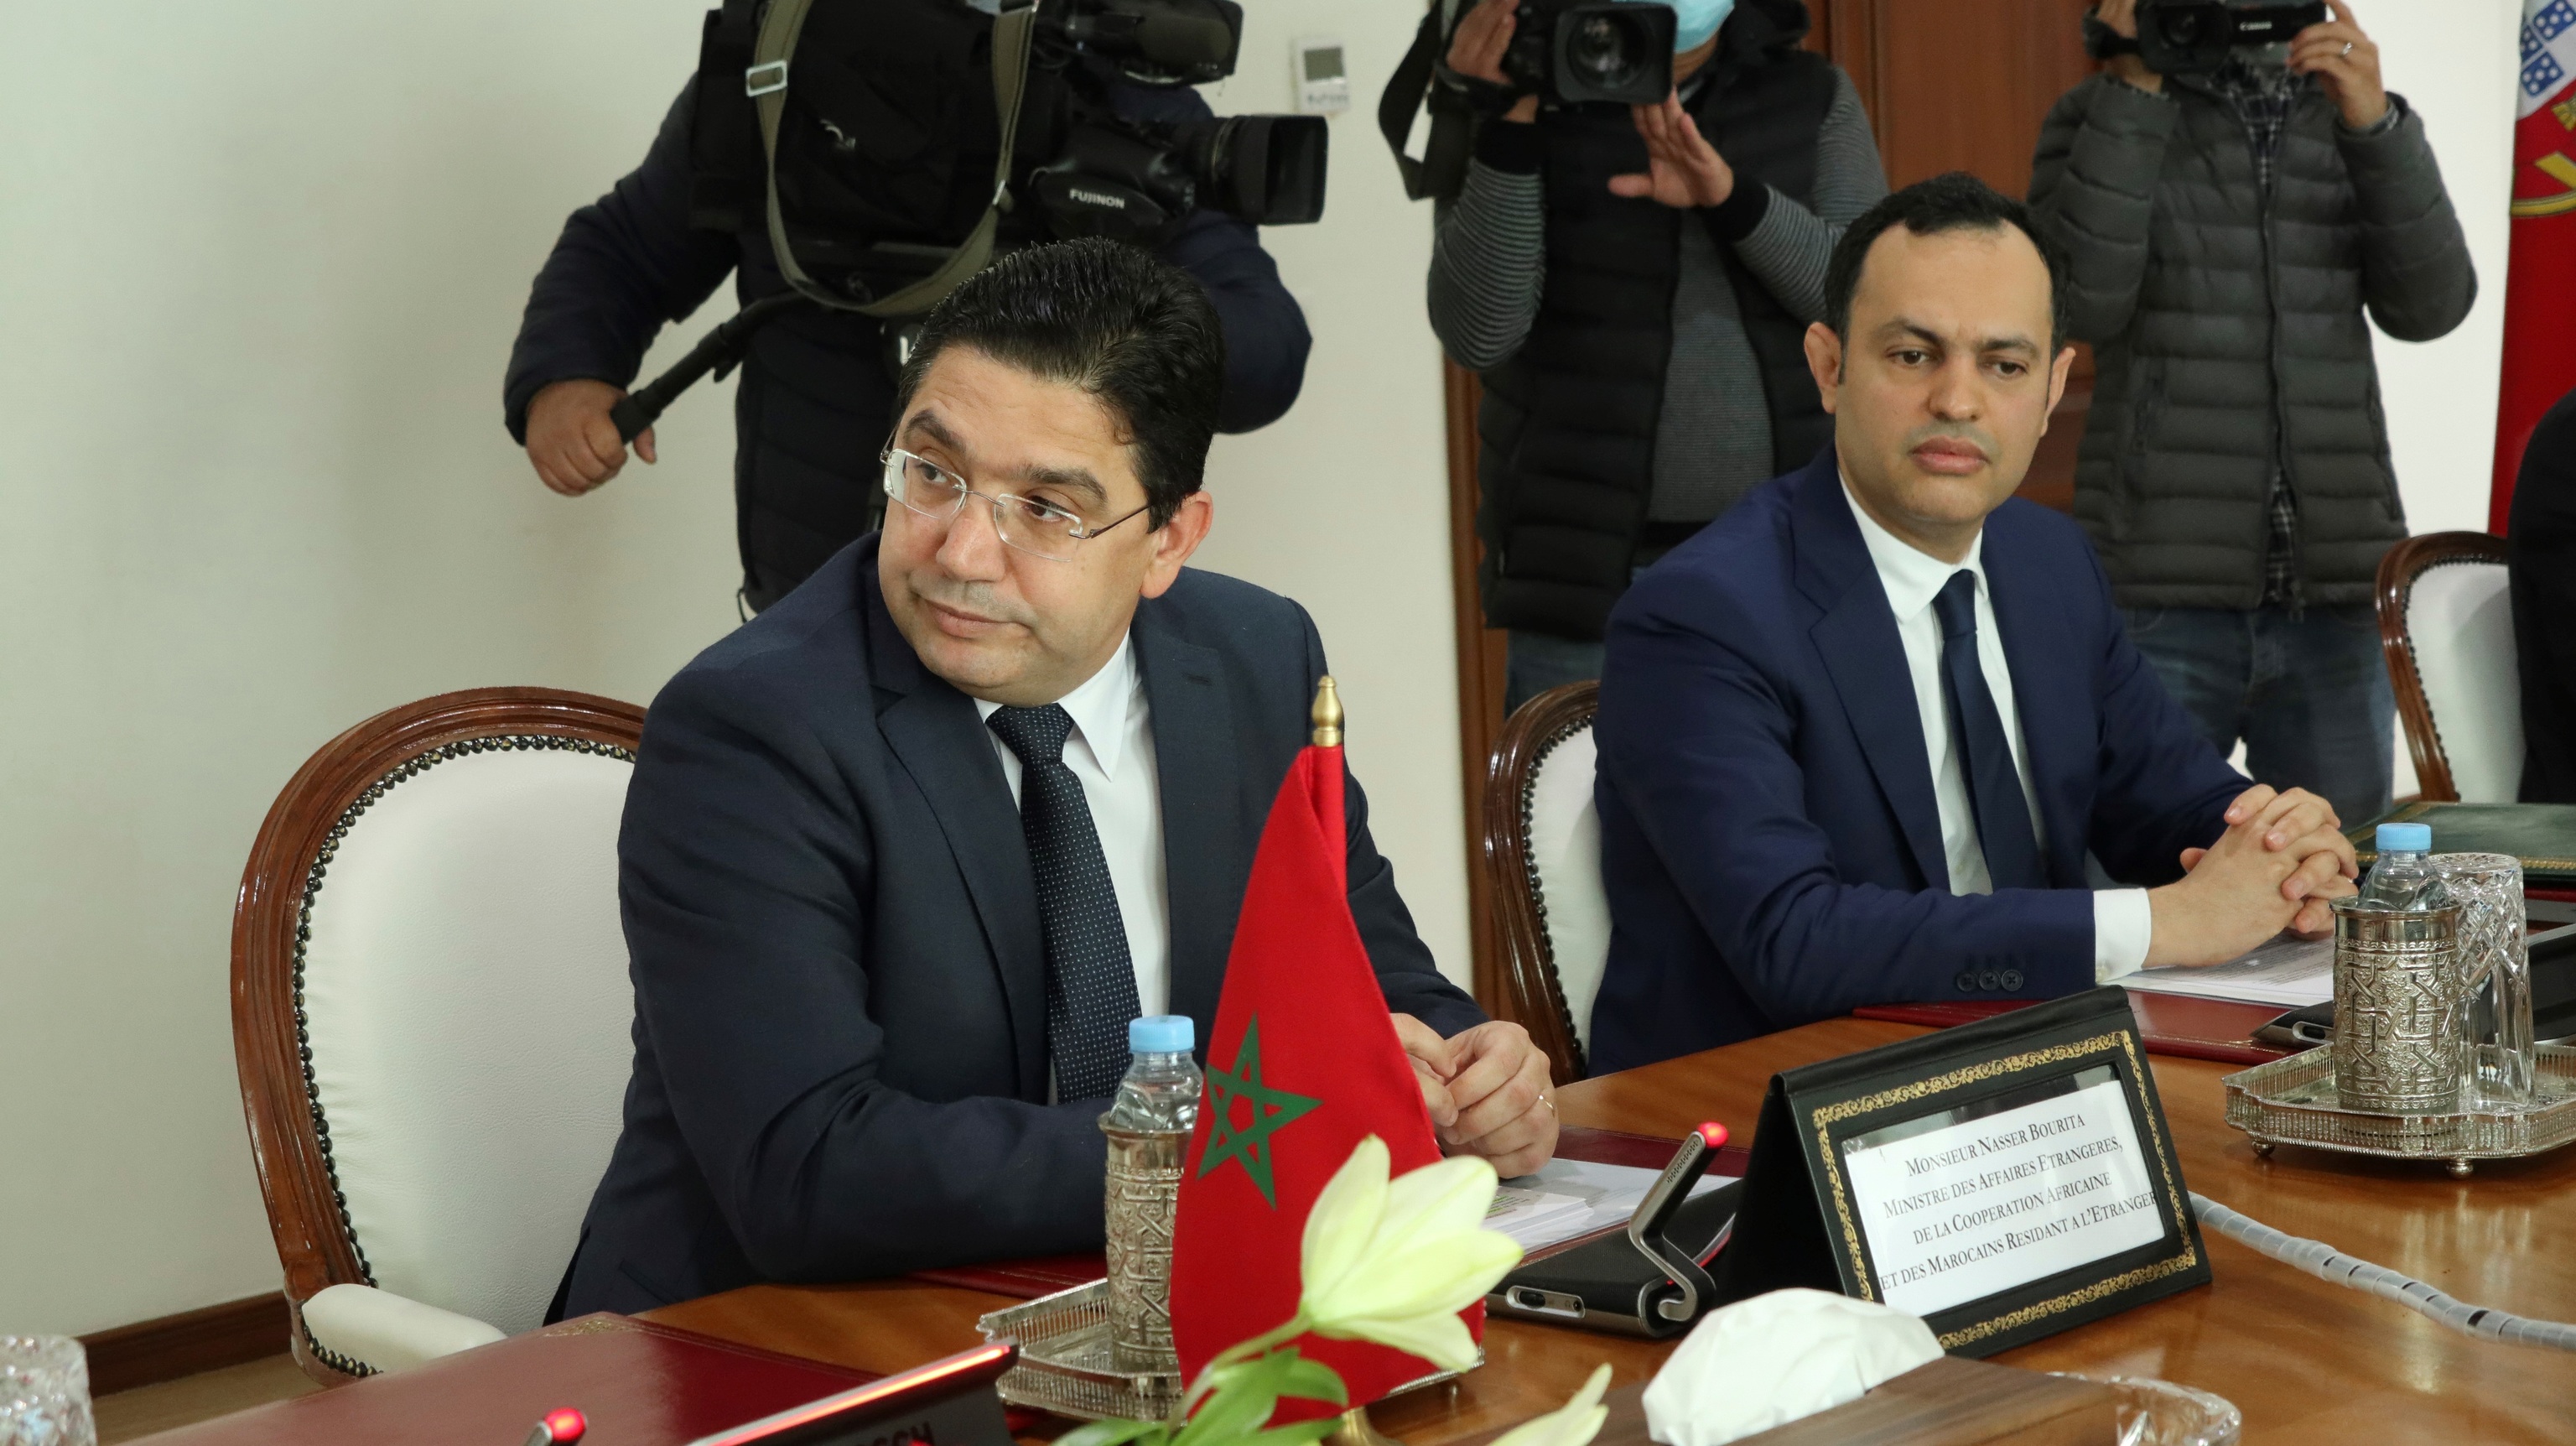 El ministro de Asuntos Exteriores marroqu, Naser Burita (izda.), en Rabat.